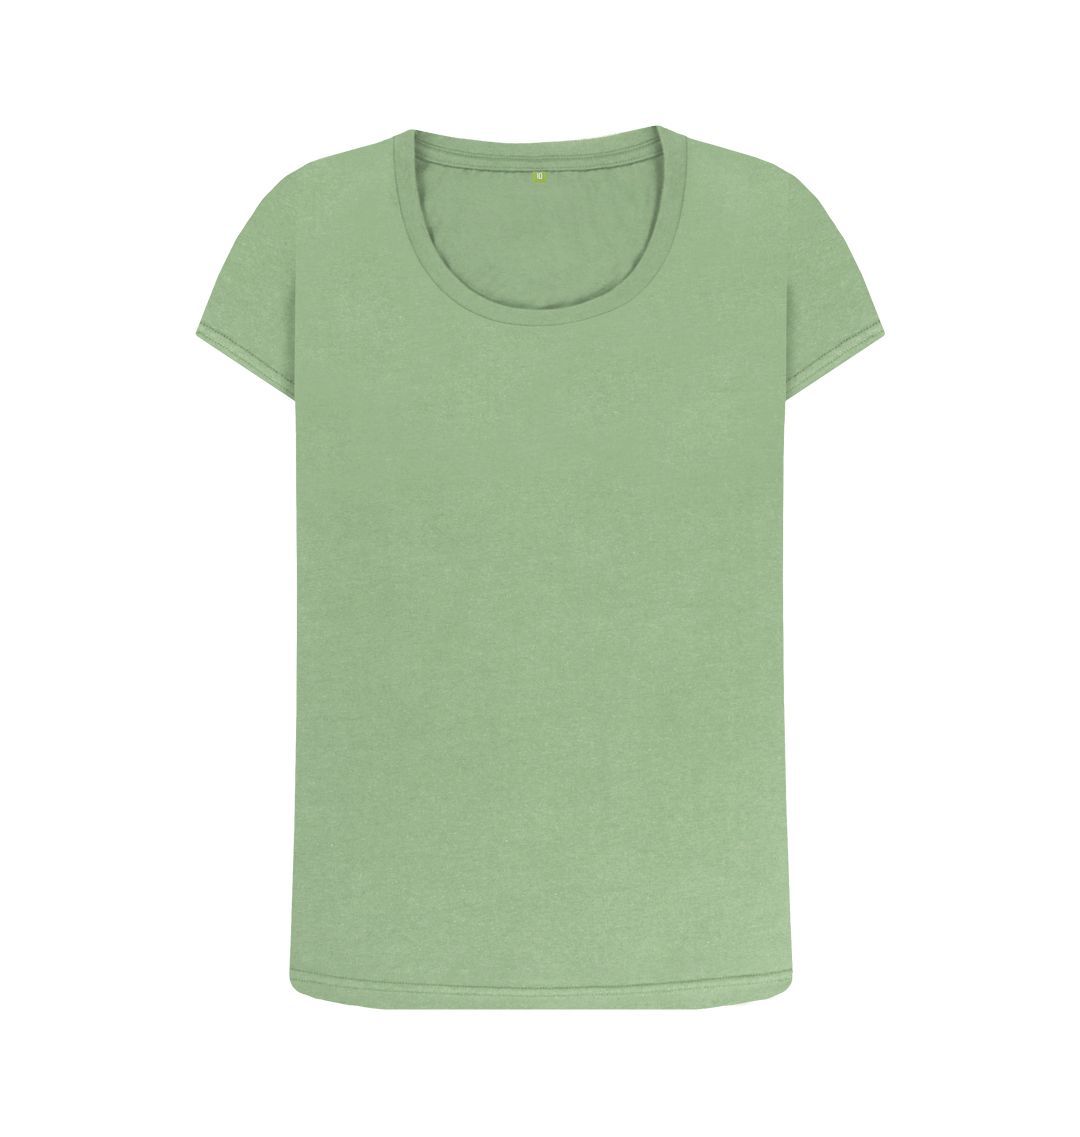 Sage Women's organic cotton scoop neck t-shirt